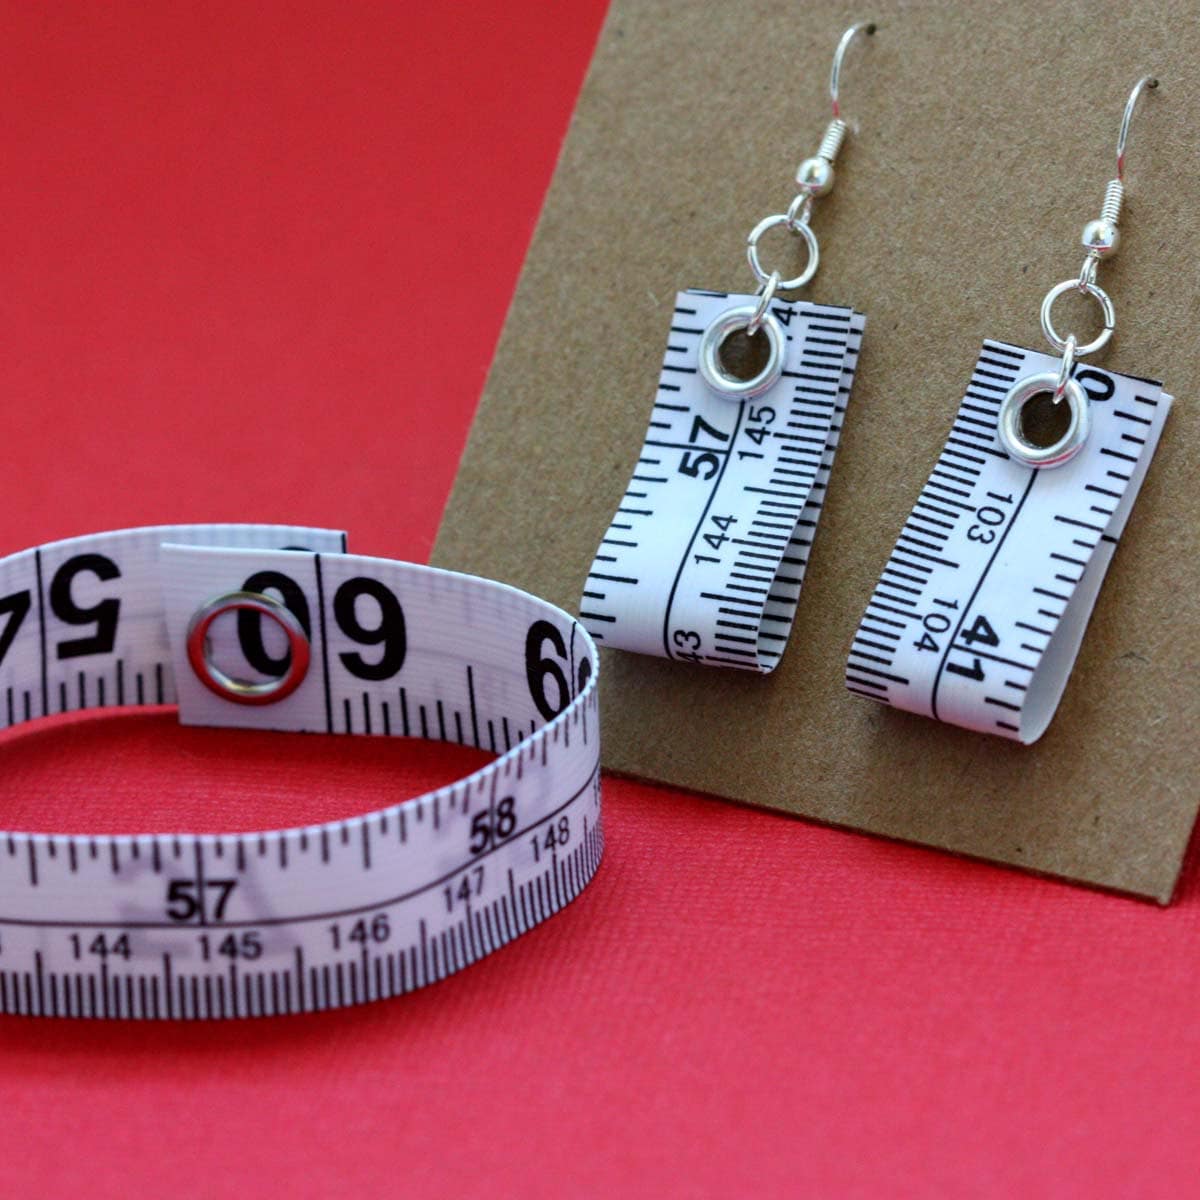 Measuring Tape Earrings - Candy Goblins